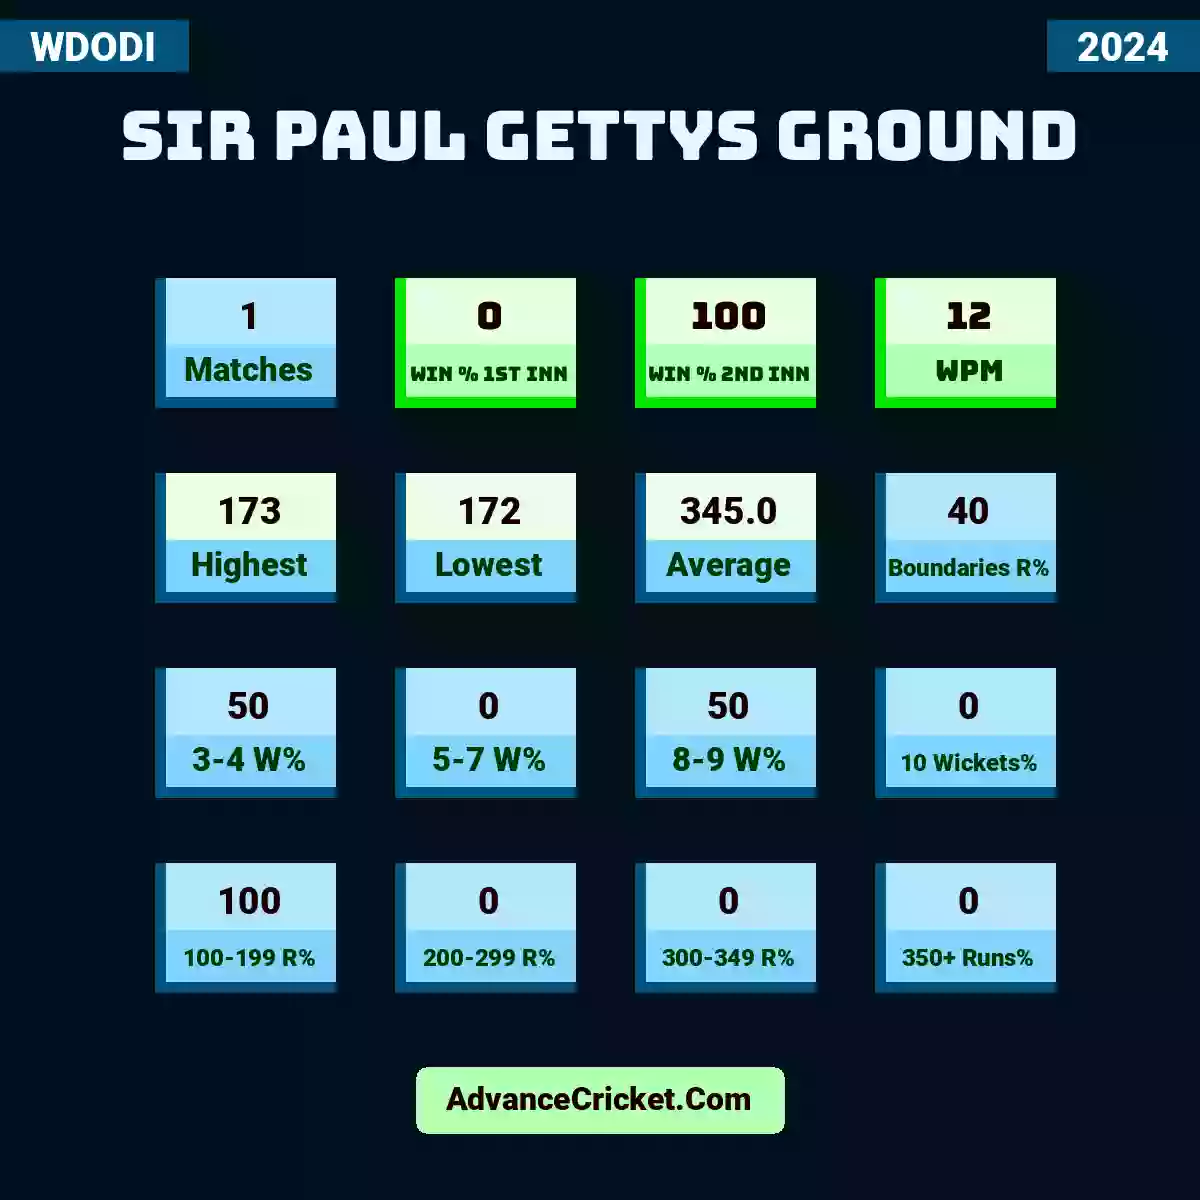 Image showing Sir Paul Gettys Ground WDODI 2024 with Matches: 1, Win % 1st Inn: 0, Win % 2nd Inn: 100, WPM: 12, Highest: 173, Lowest: 172, Average: 345.0, Boundaries R%: 40, 3-4 W%: 50, 5-7 W%: 0, 8-9 W%: 50, 10 Wickets%: 0, 100-199 R%: 100, 200-299 R%: 0, 300-349 R%: 0, 350+ Runs%: 0.